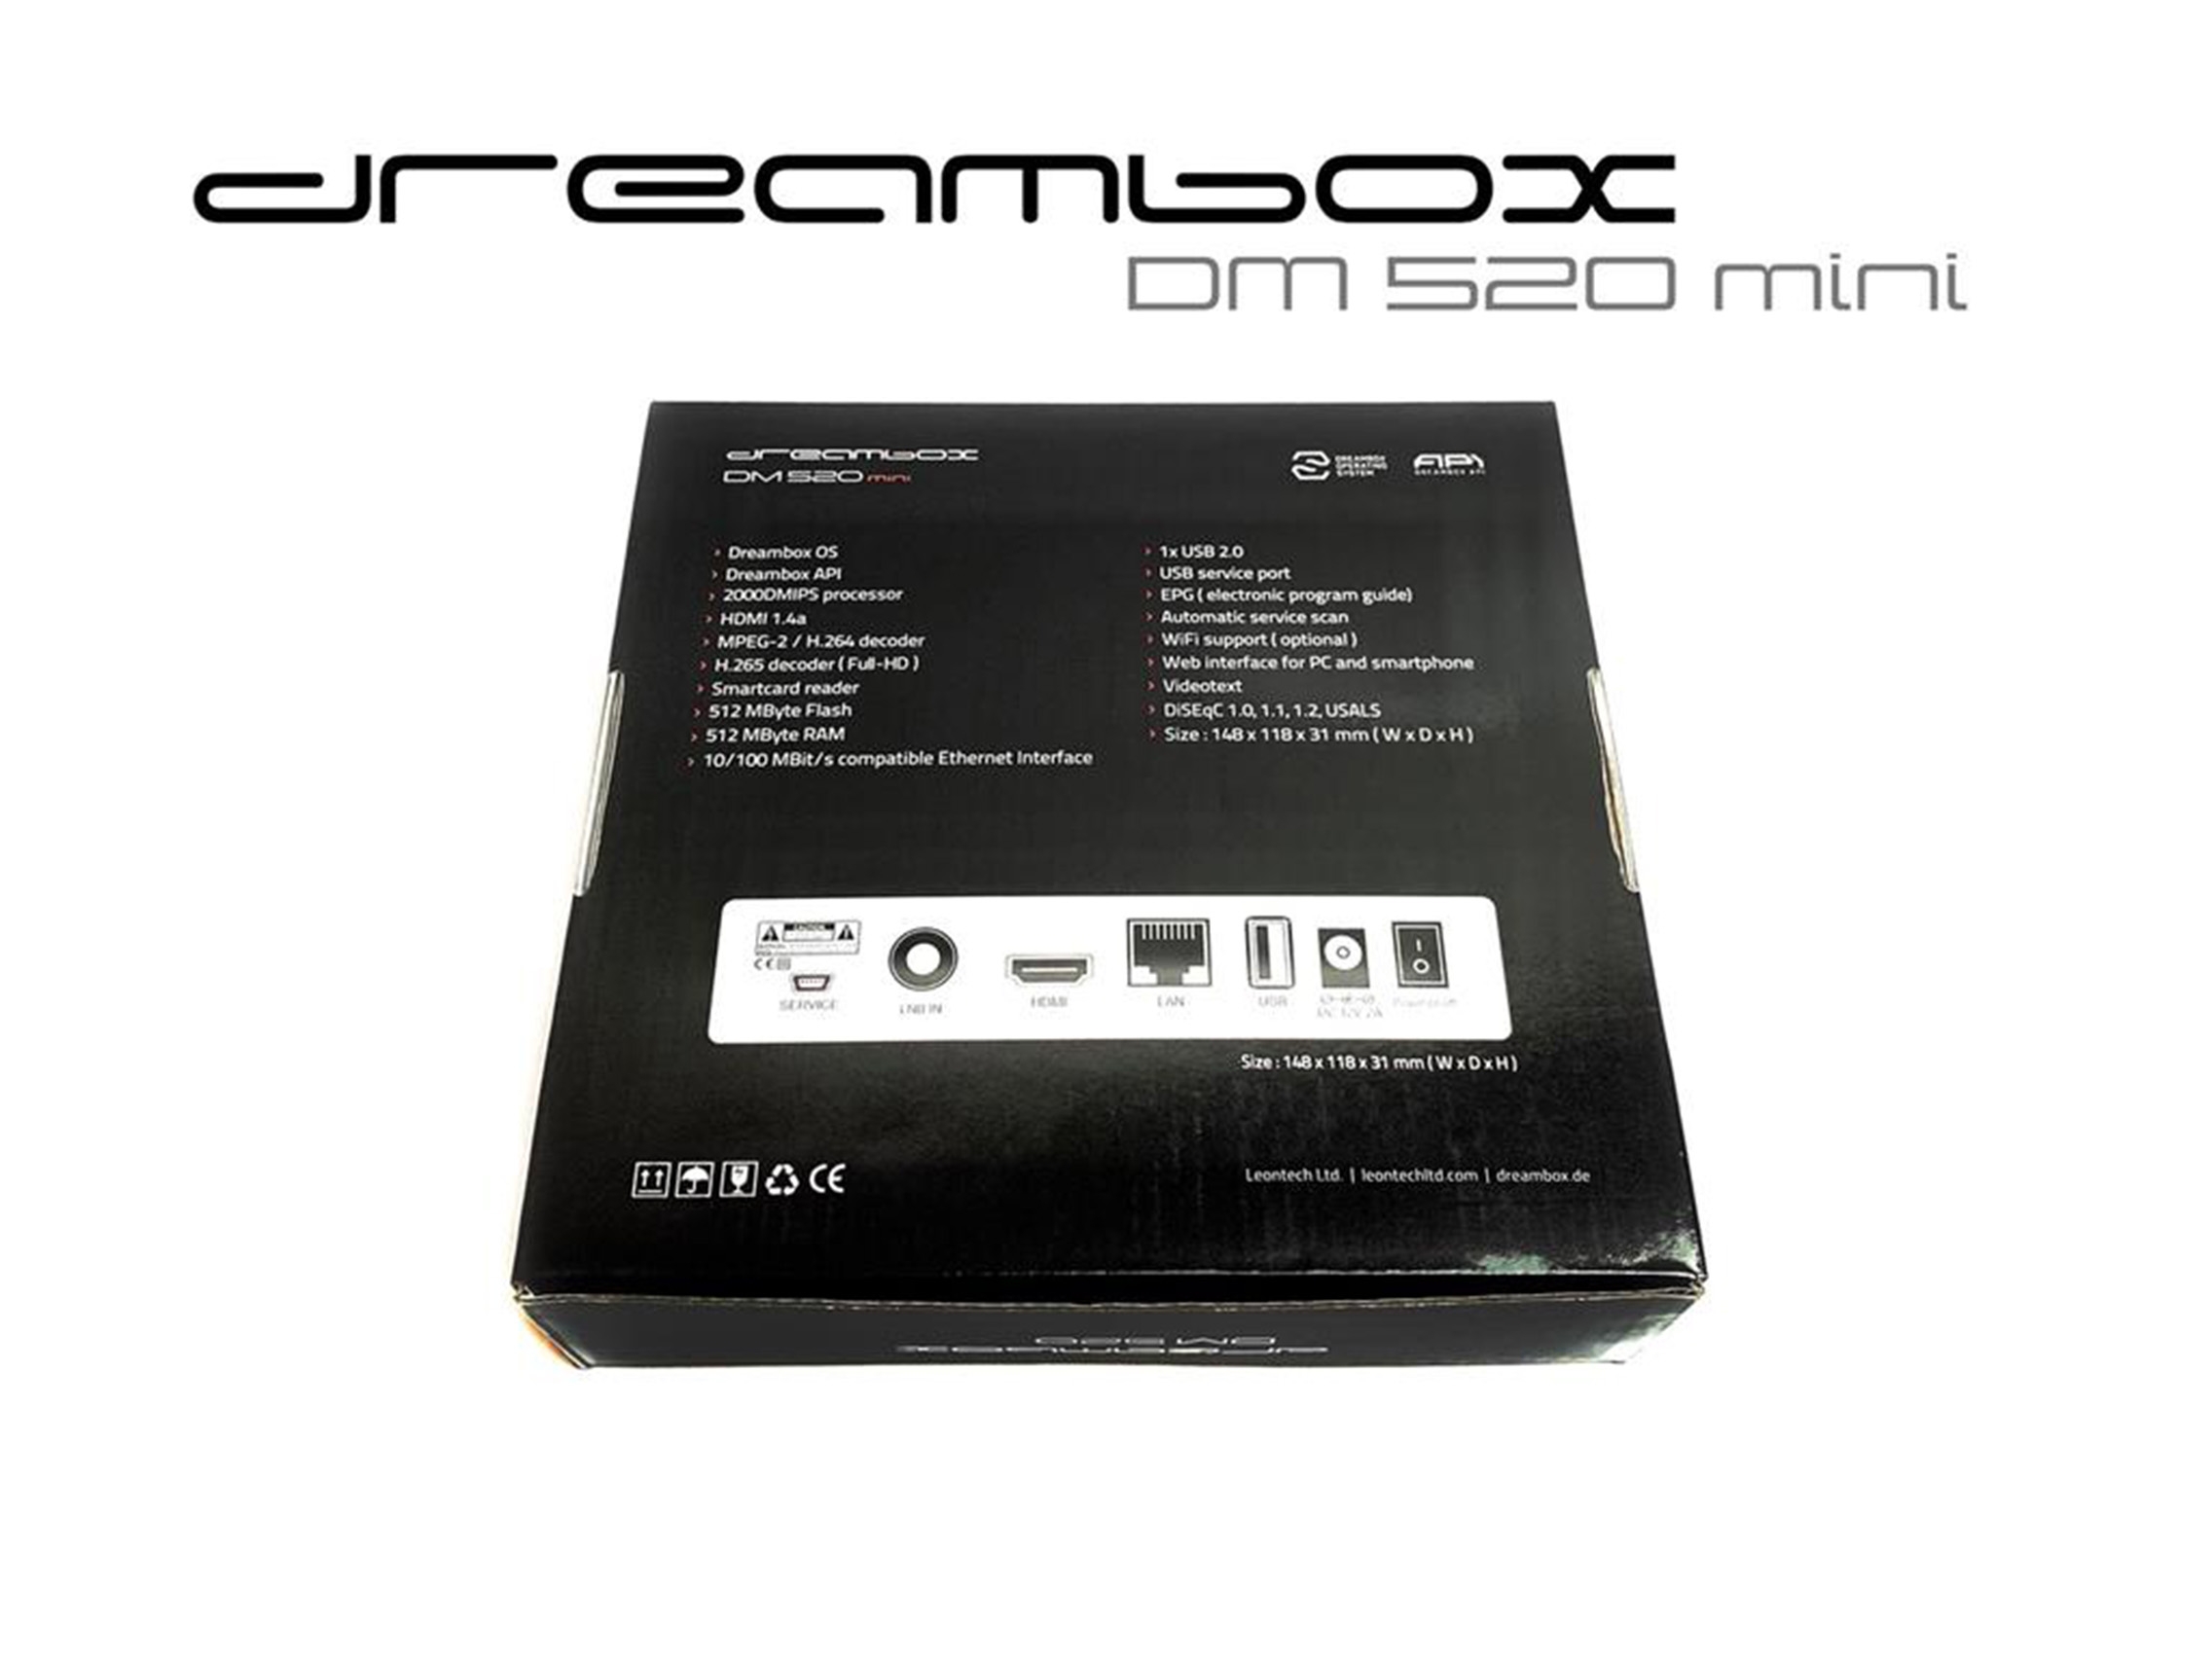 Dreambox DM 520 mini HD 1x DVB-S2 Tuner PVR ready Full HD 1080p H.265 Linux Receiver